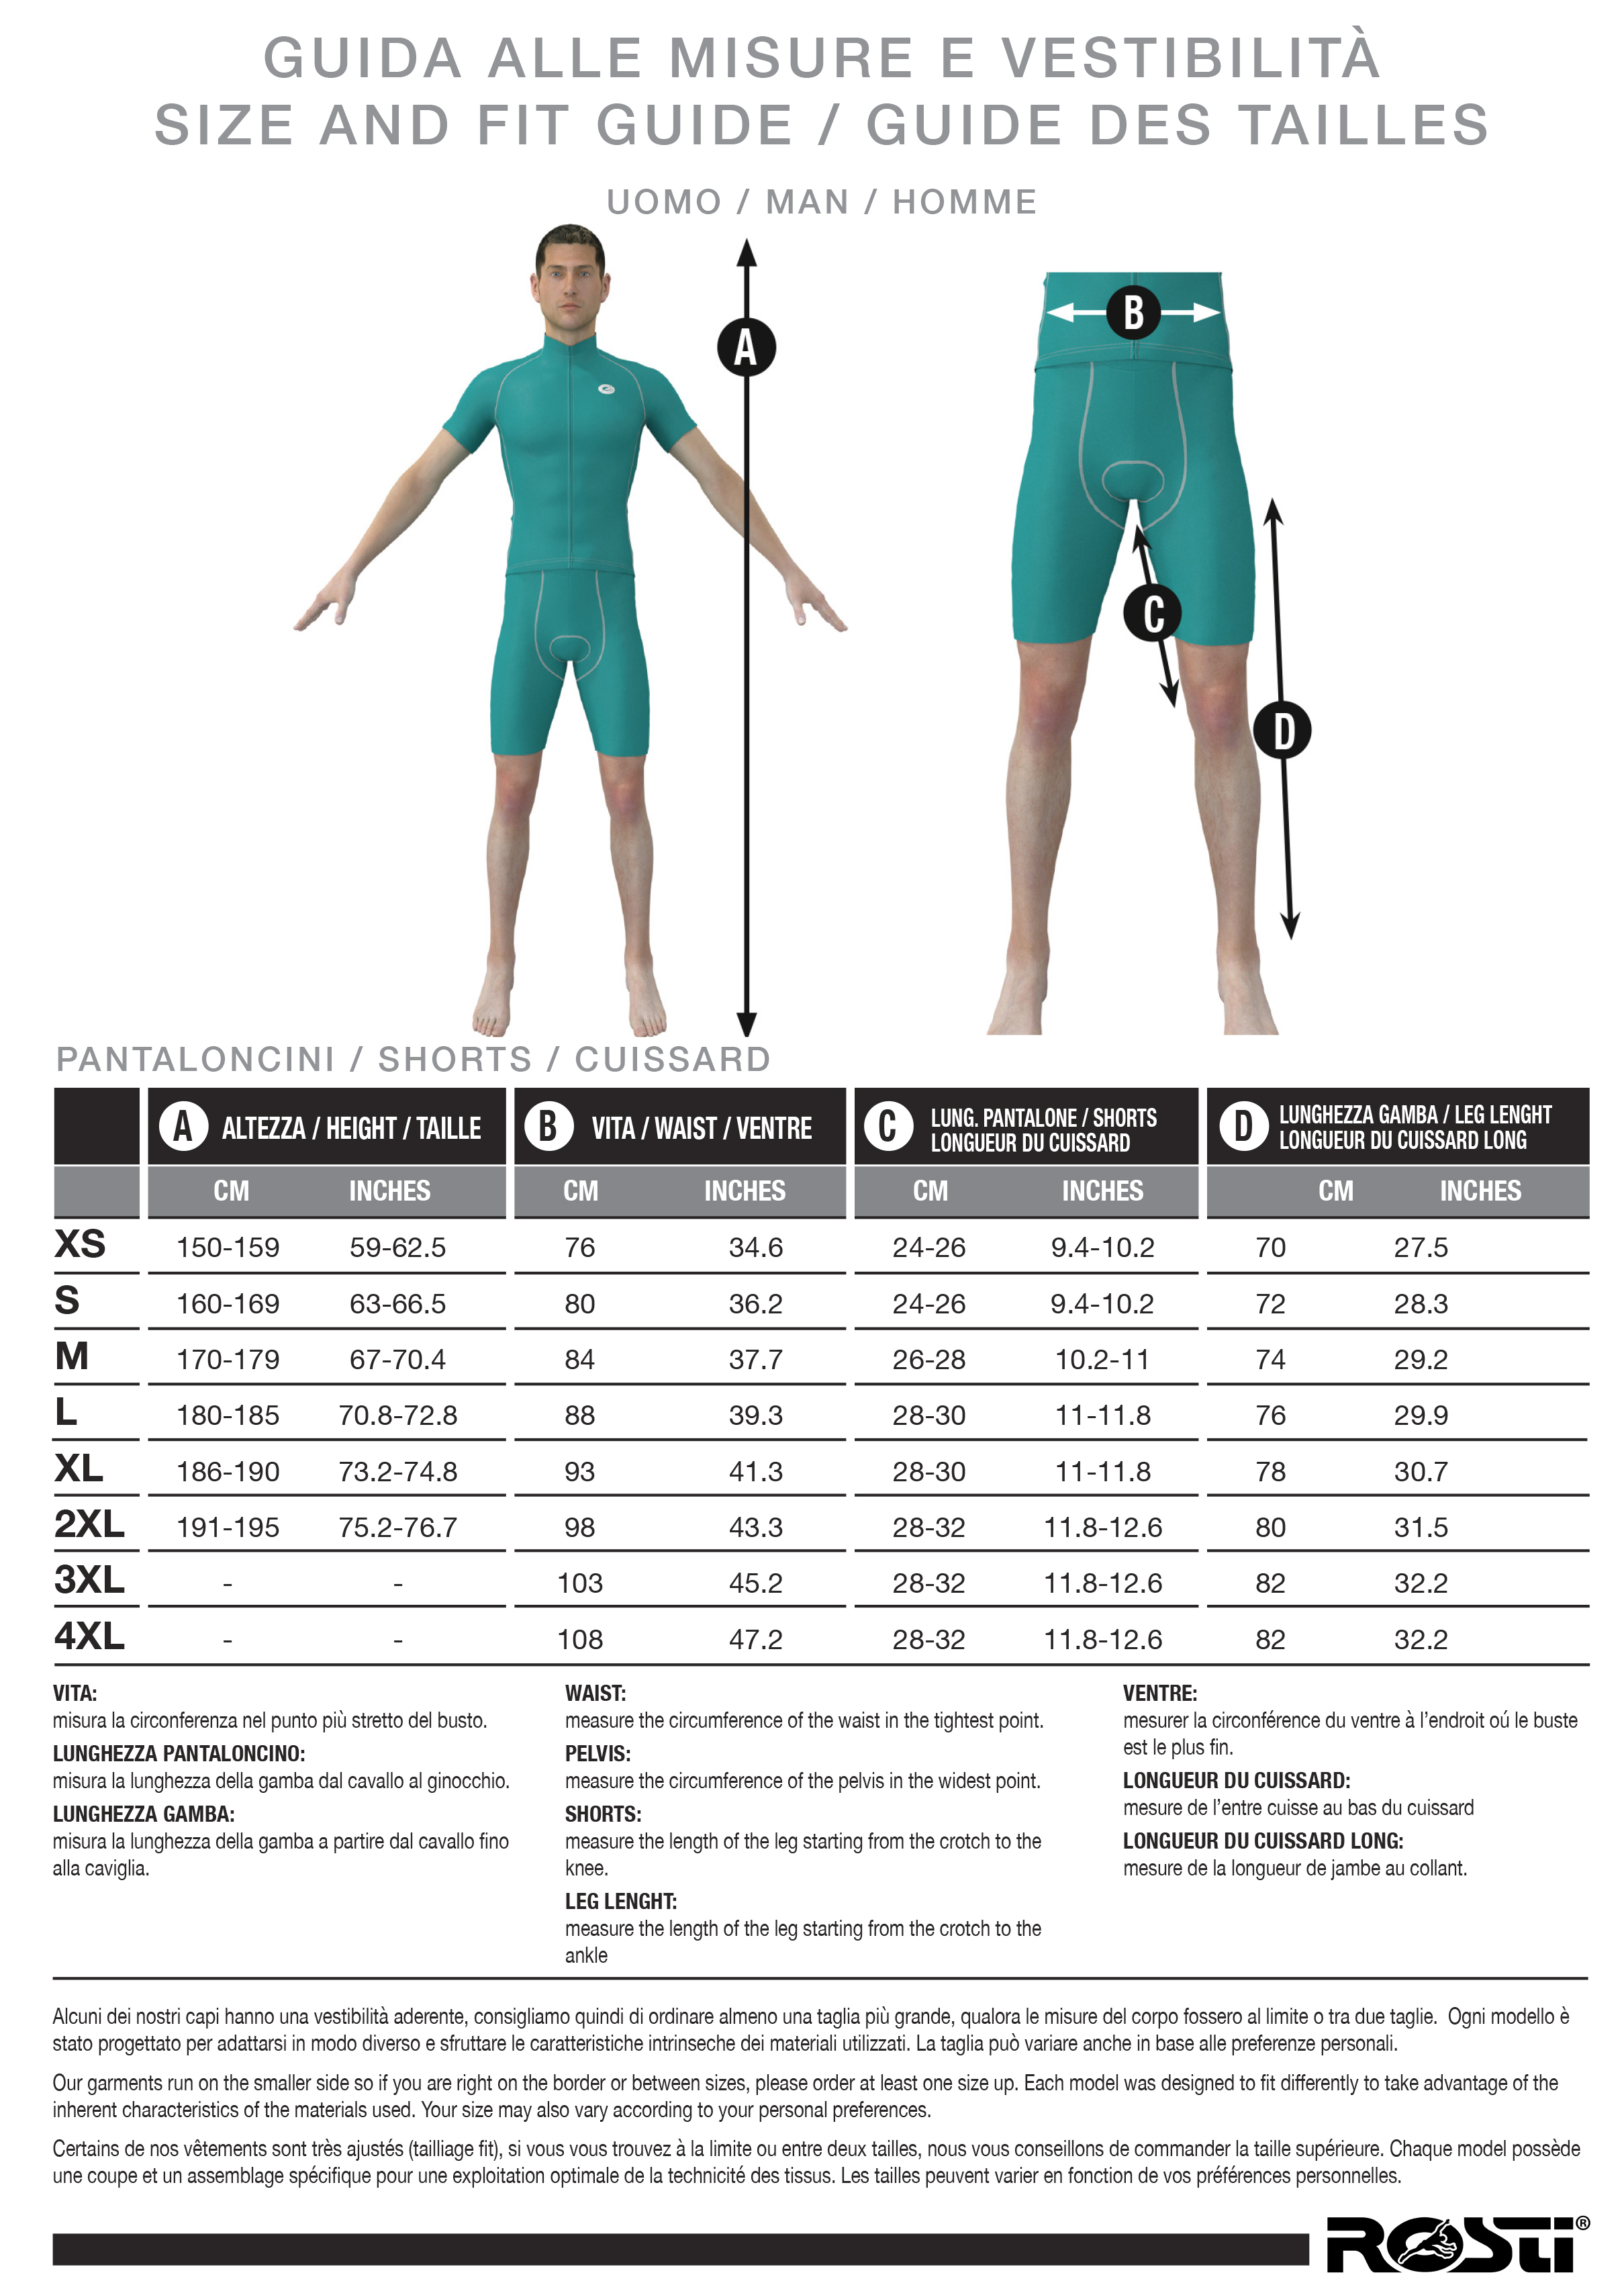 Men's shorts size guide